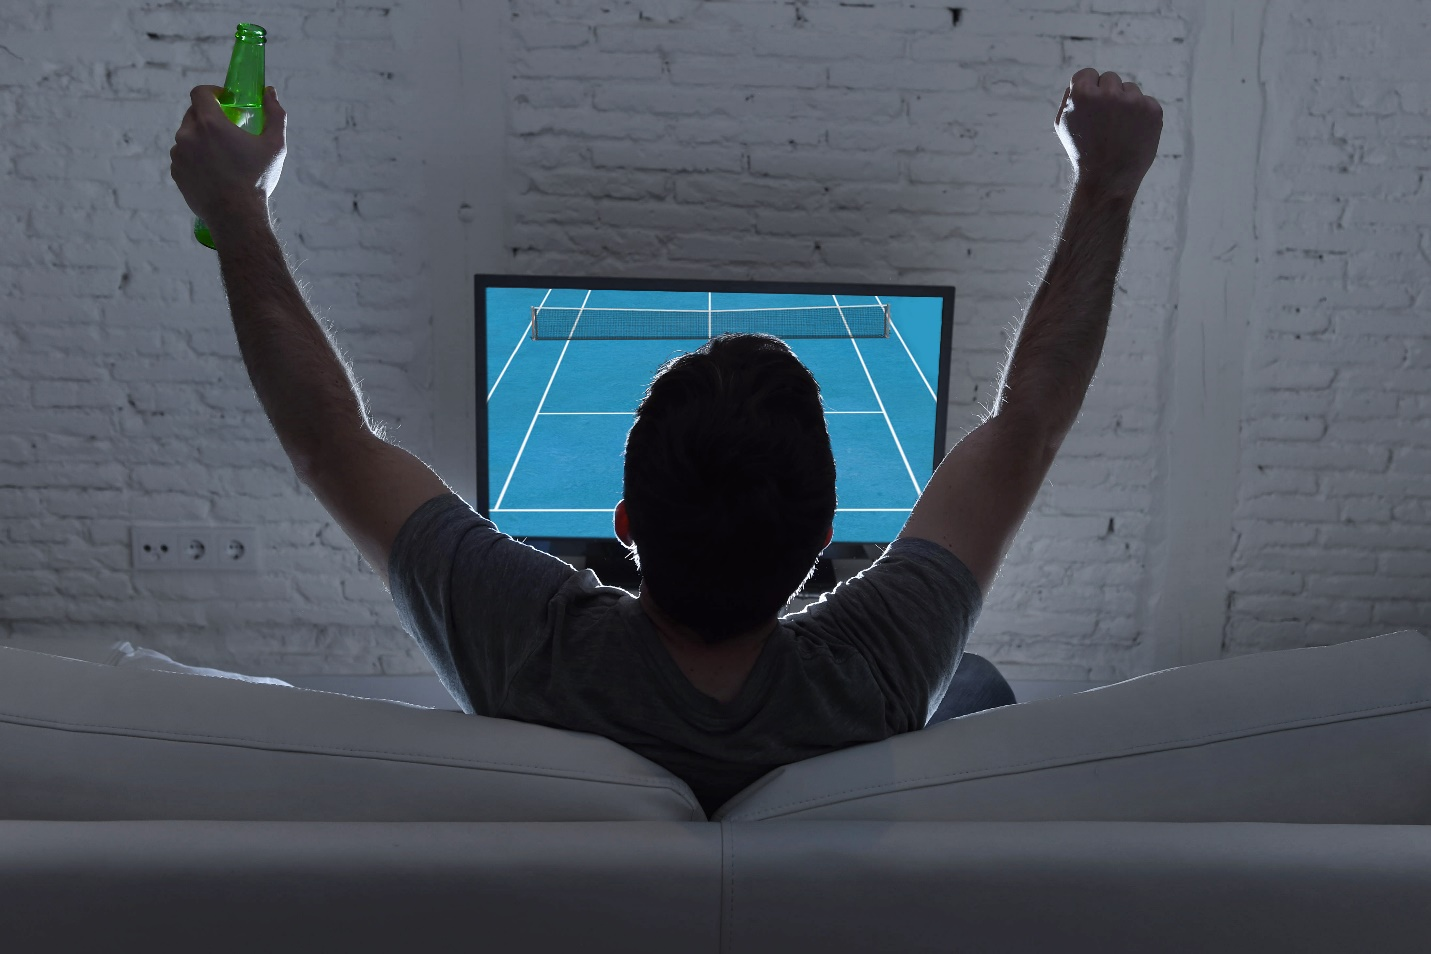 a man watching tennis